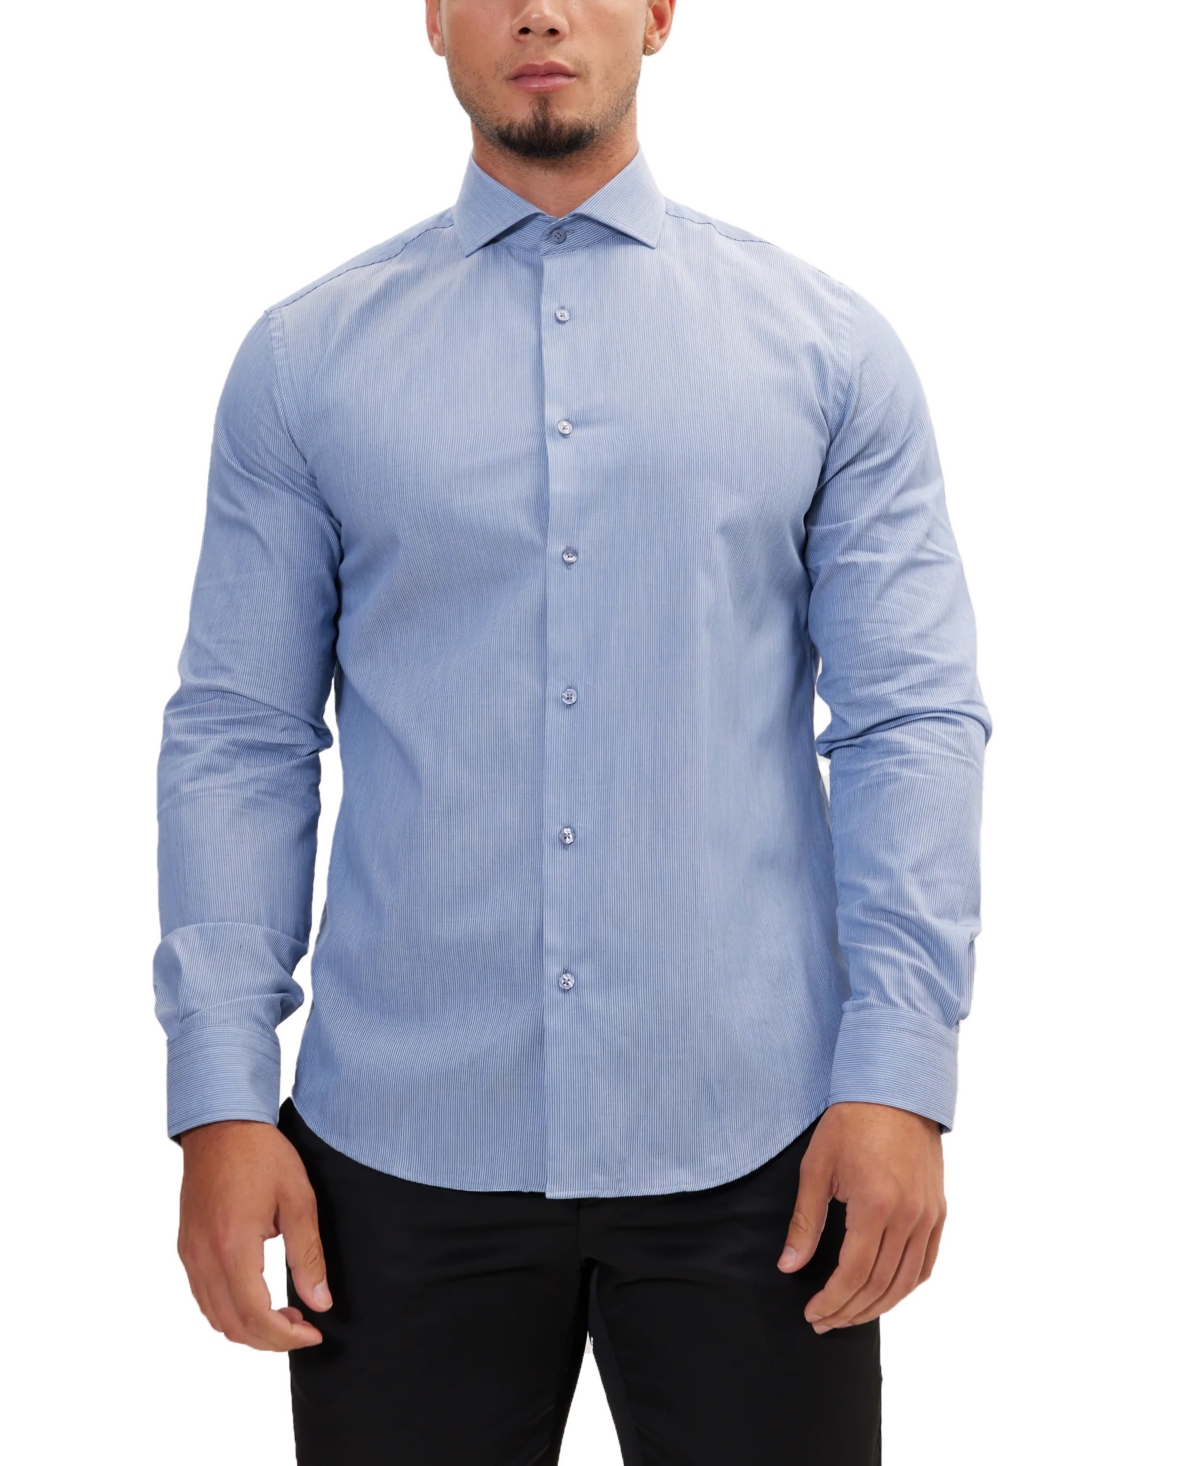 Men's Modern Spread Collar Textured Fitted Shirt - Navy White-